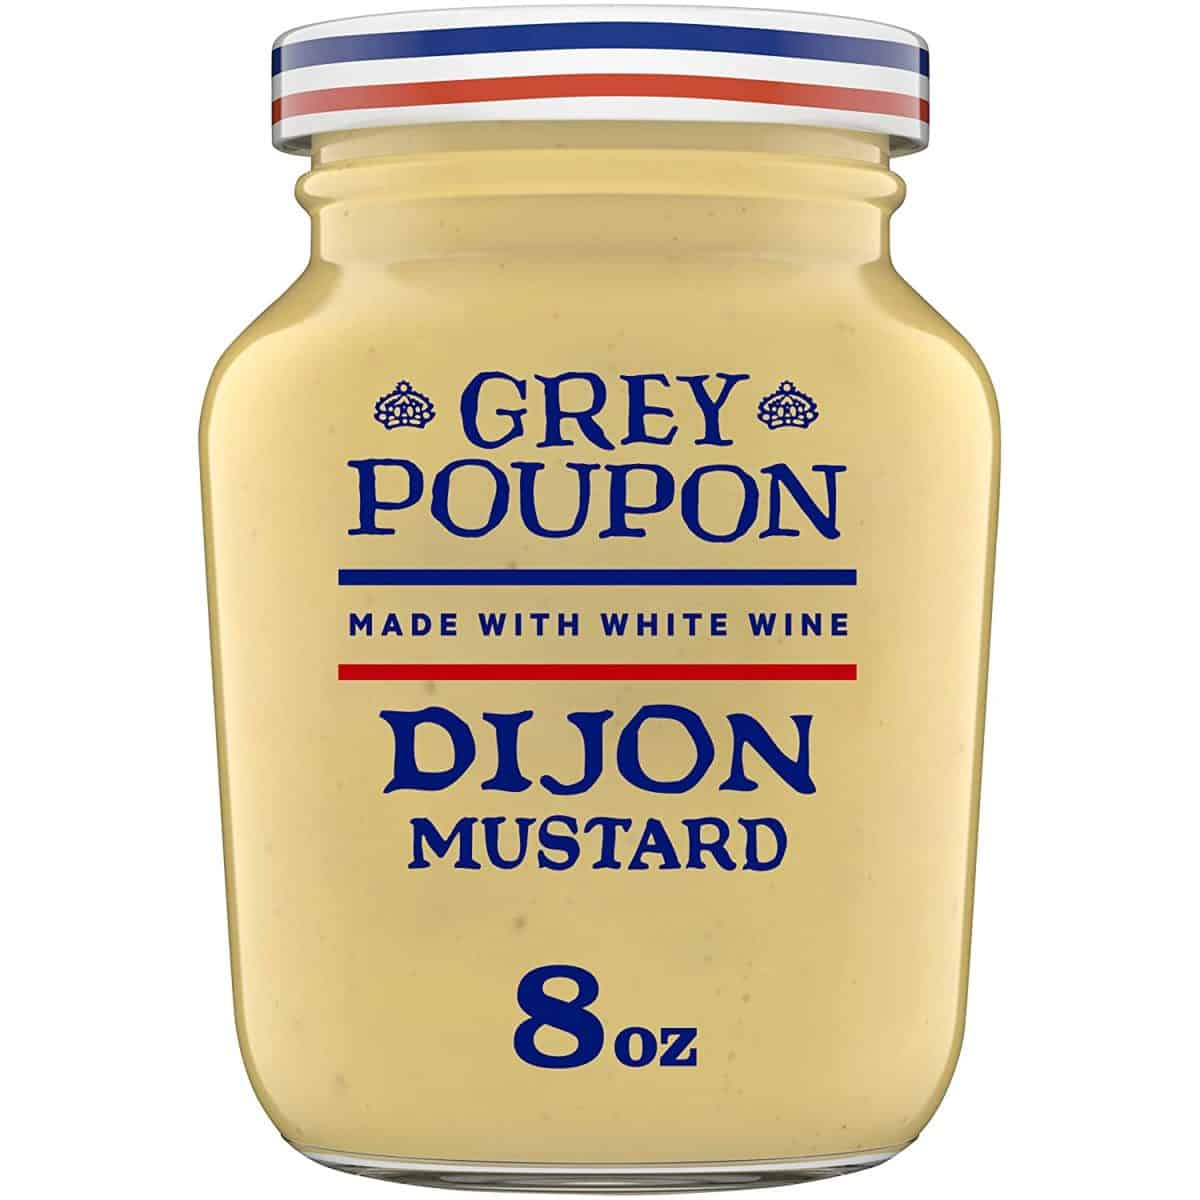 Best substitute for mustard powder is Dijon mustard